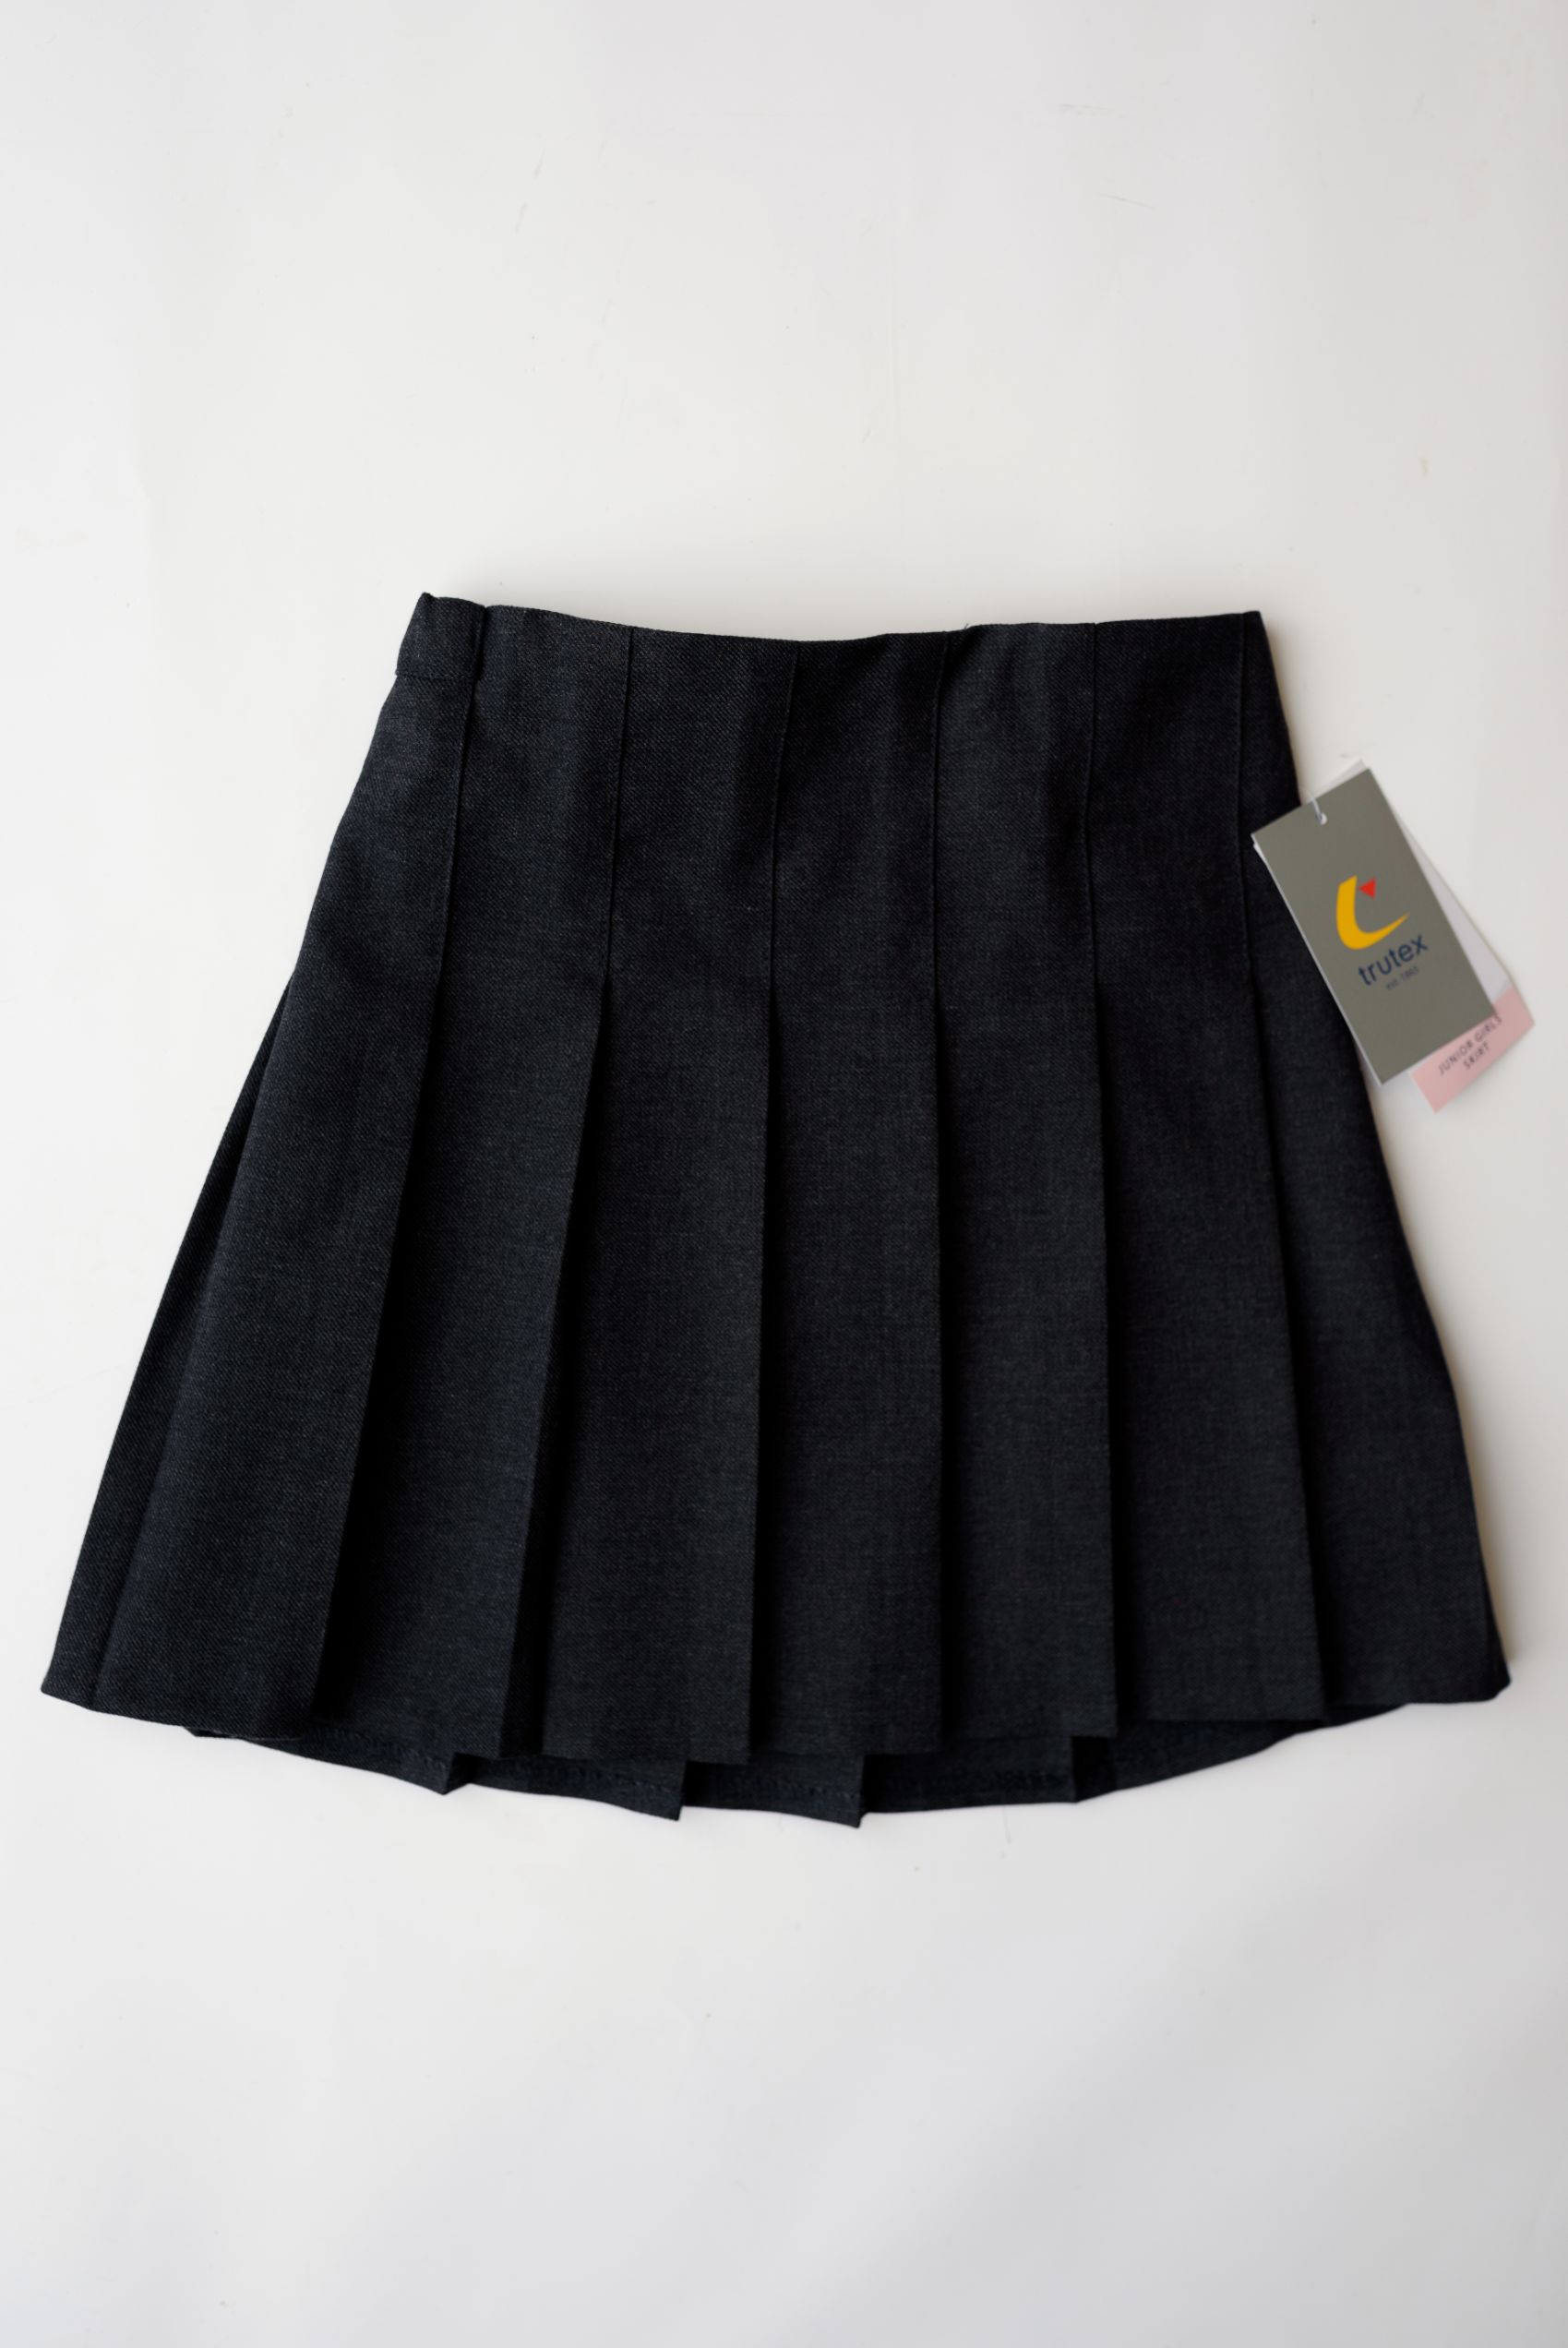 Reform School Pleated Garter Skirt #1